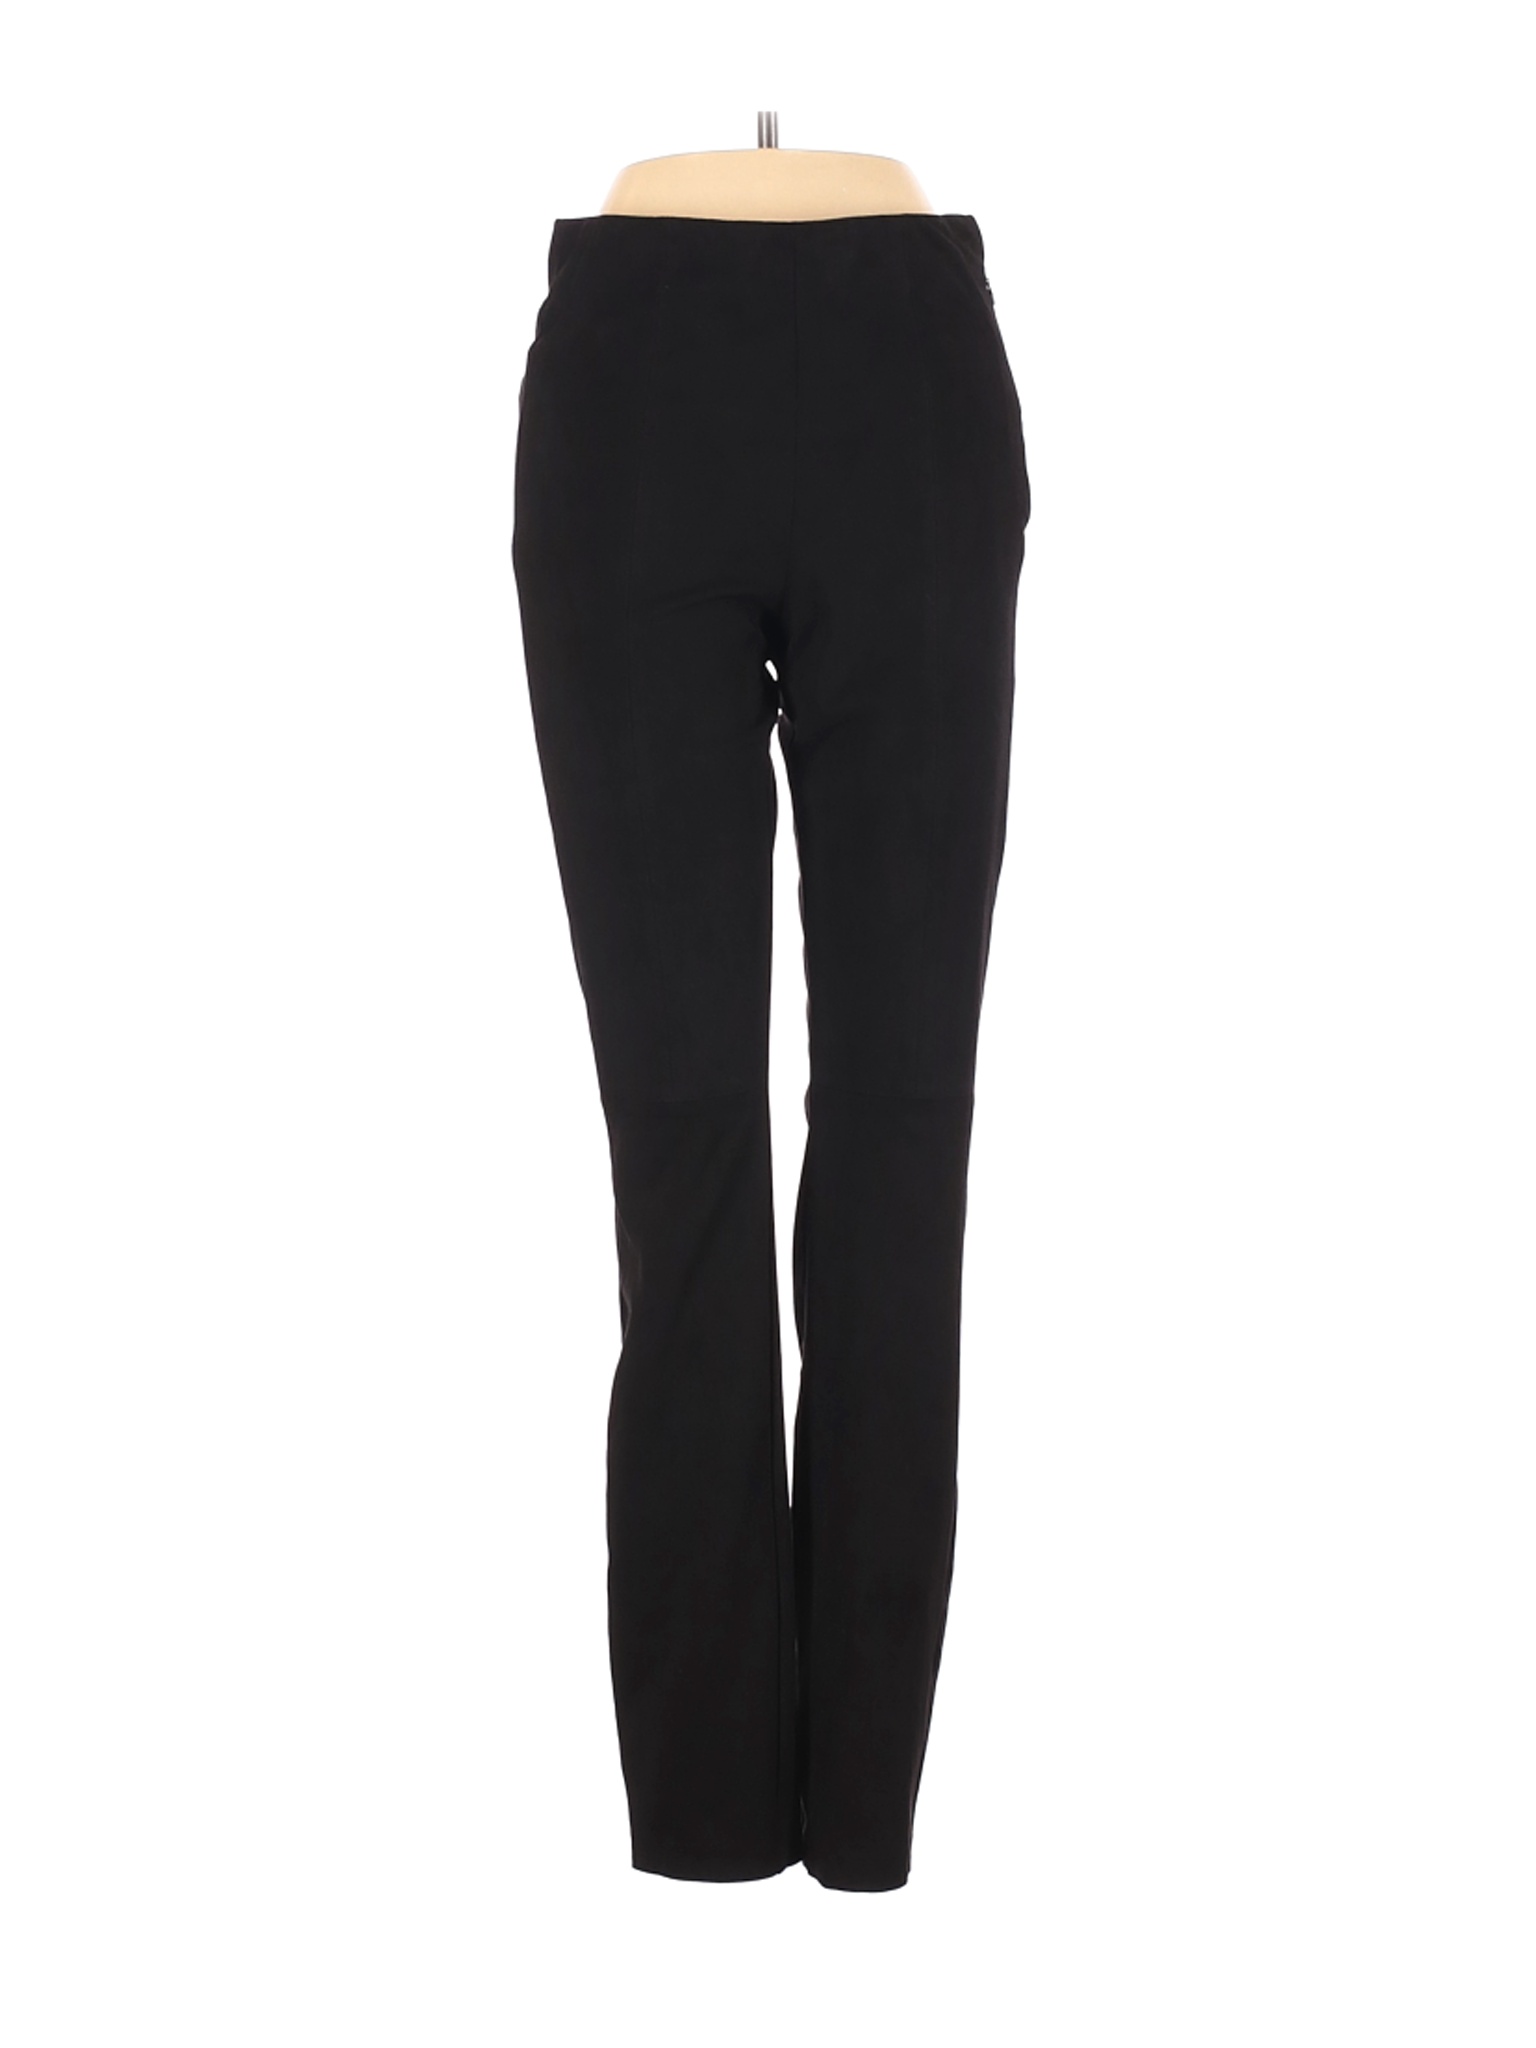 Trafaluc by Zara Women Black Dress Pants S | eBay